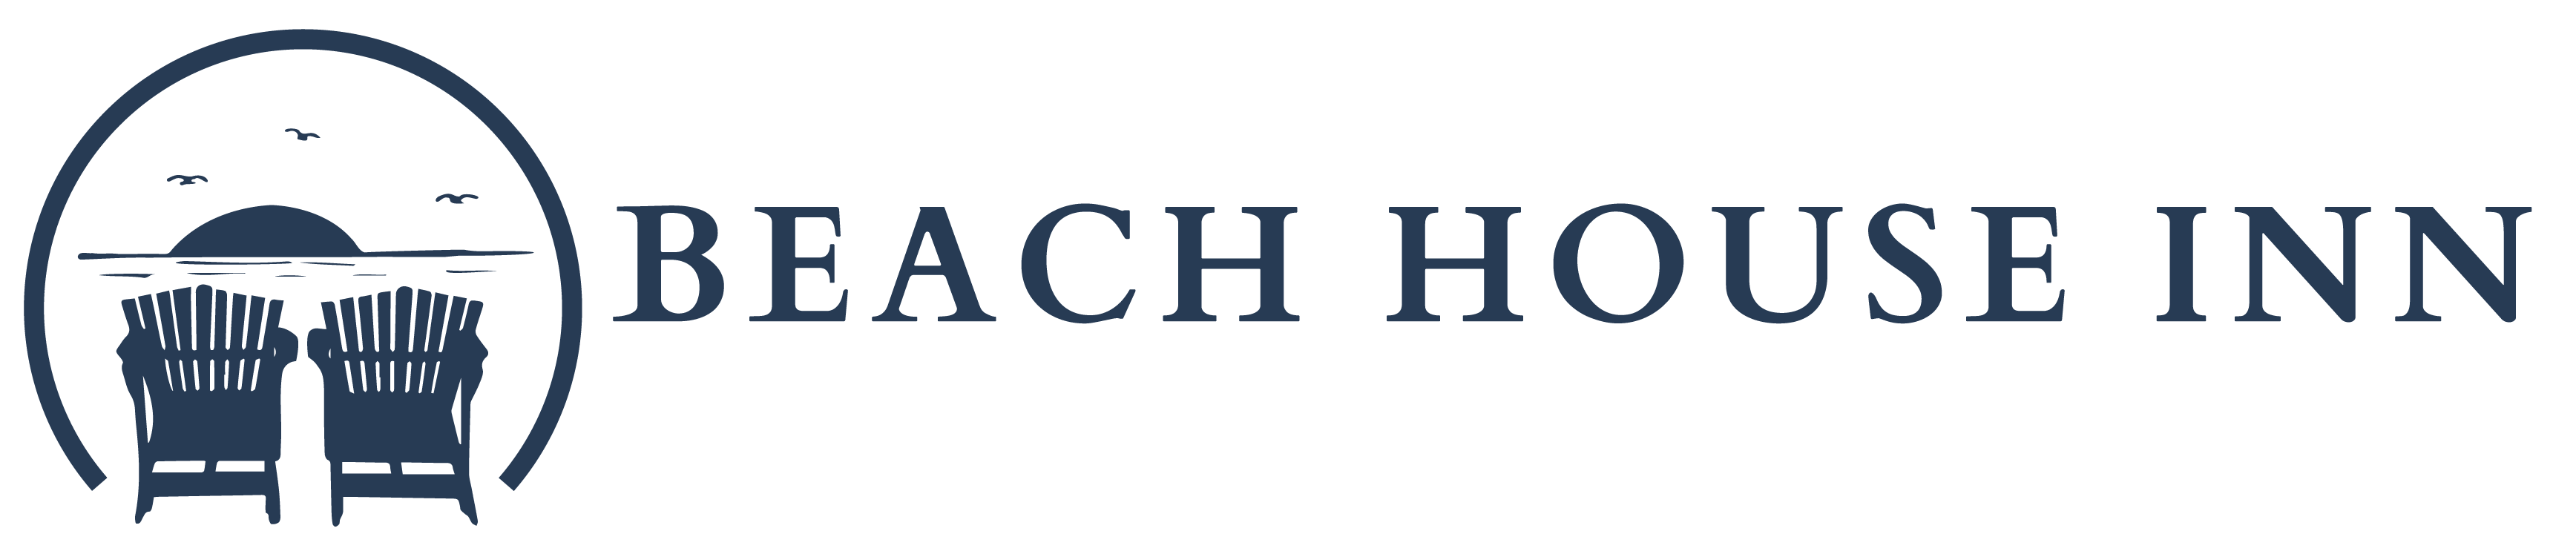 beach house inn logo kennebunk horizontal navy